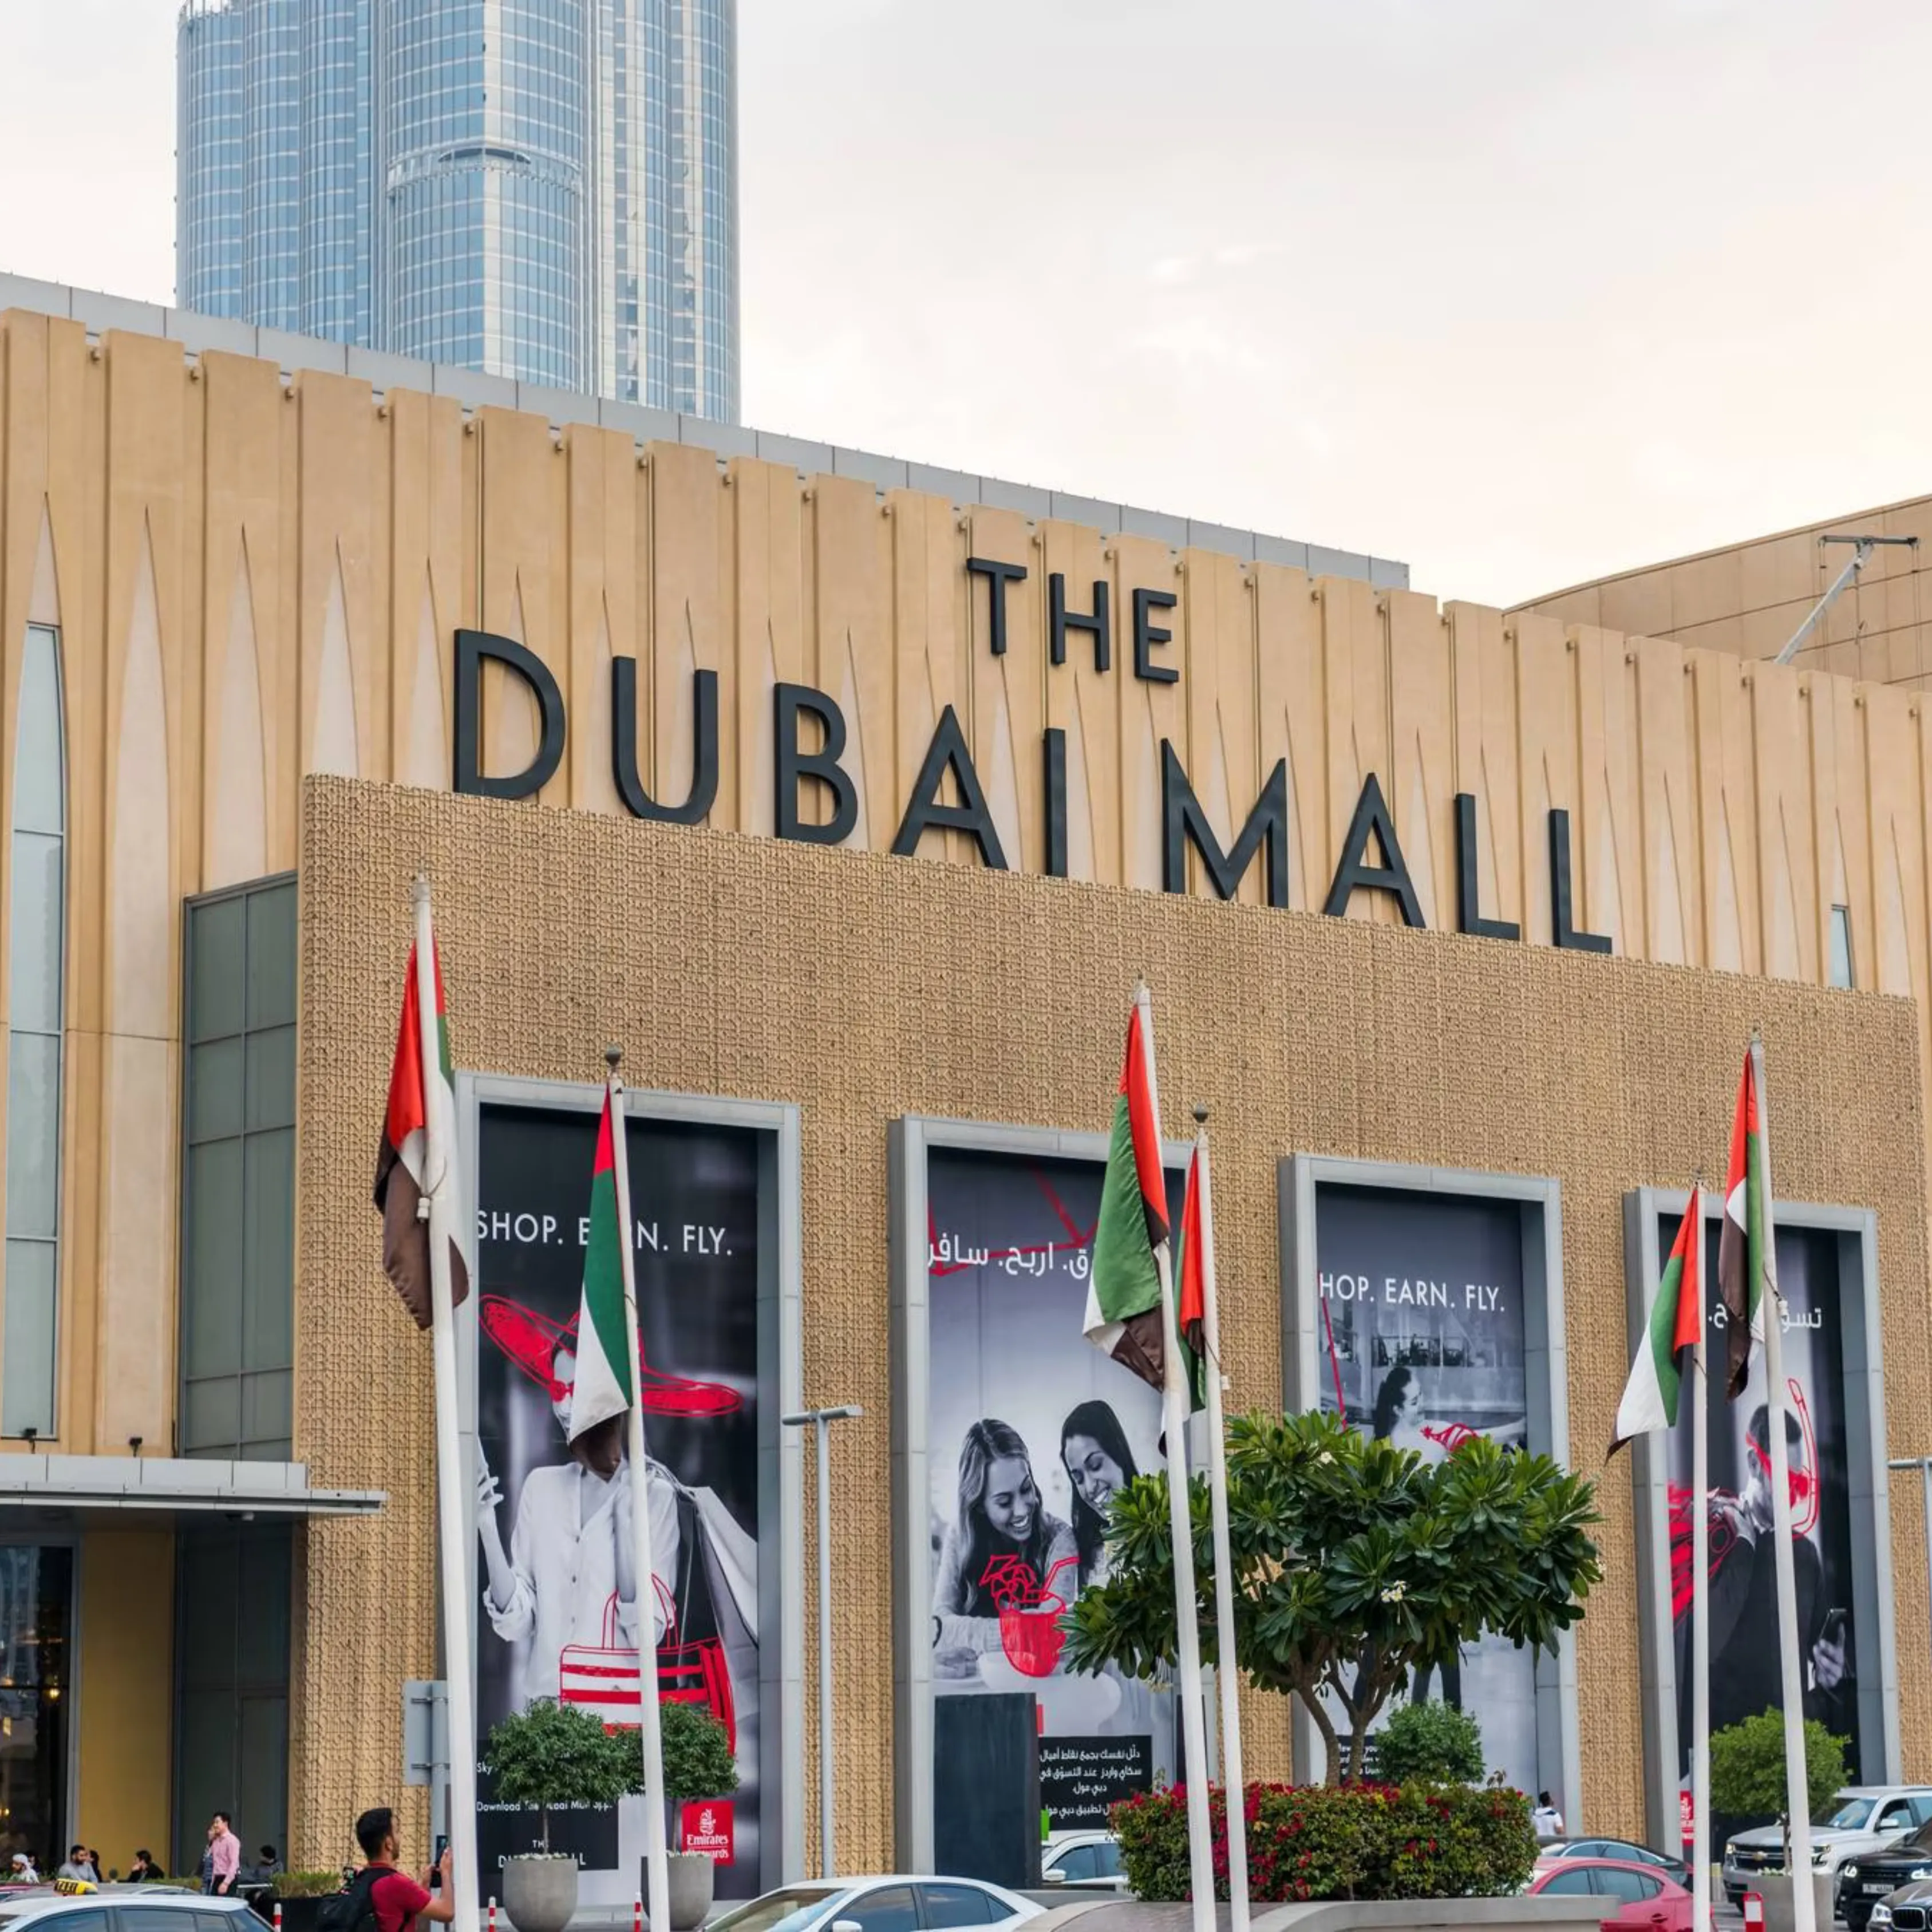 BEST SHOPPING MALLS IN DUBAI